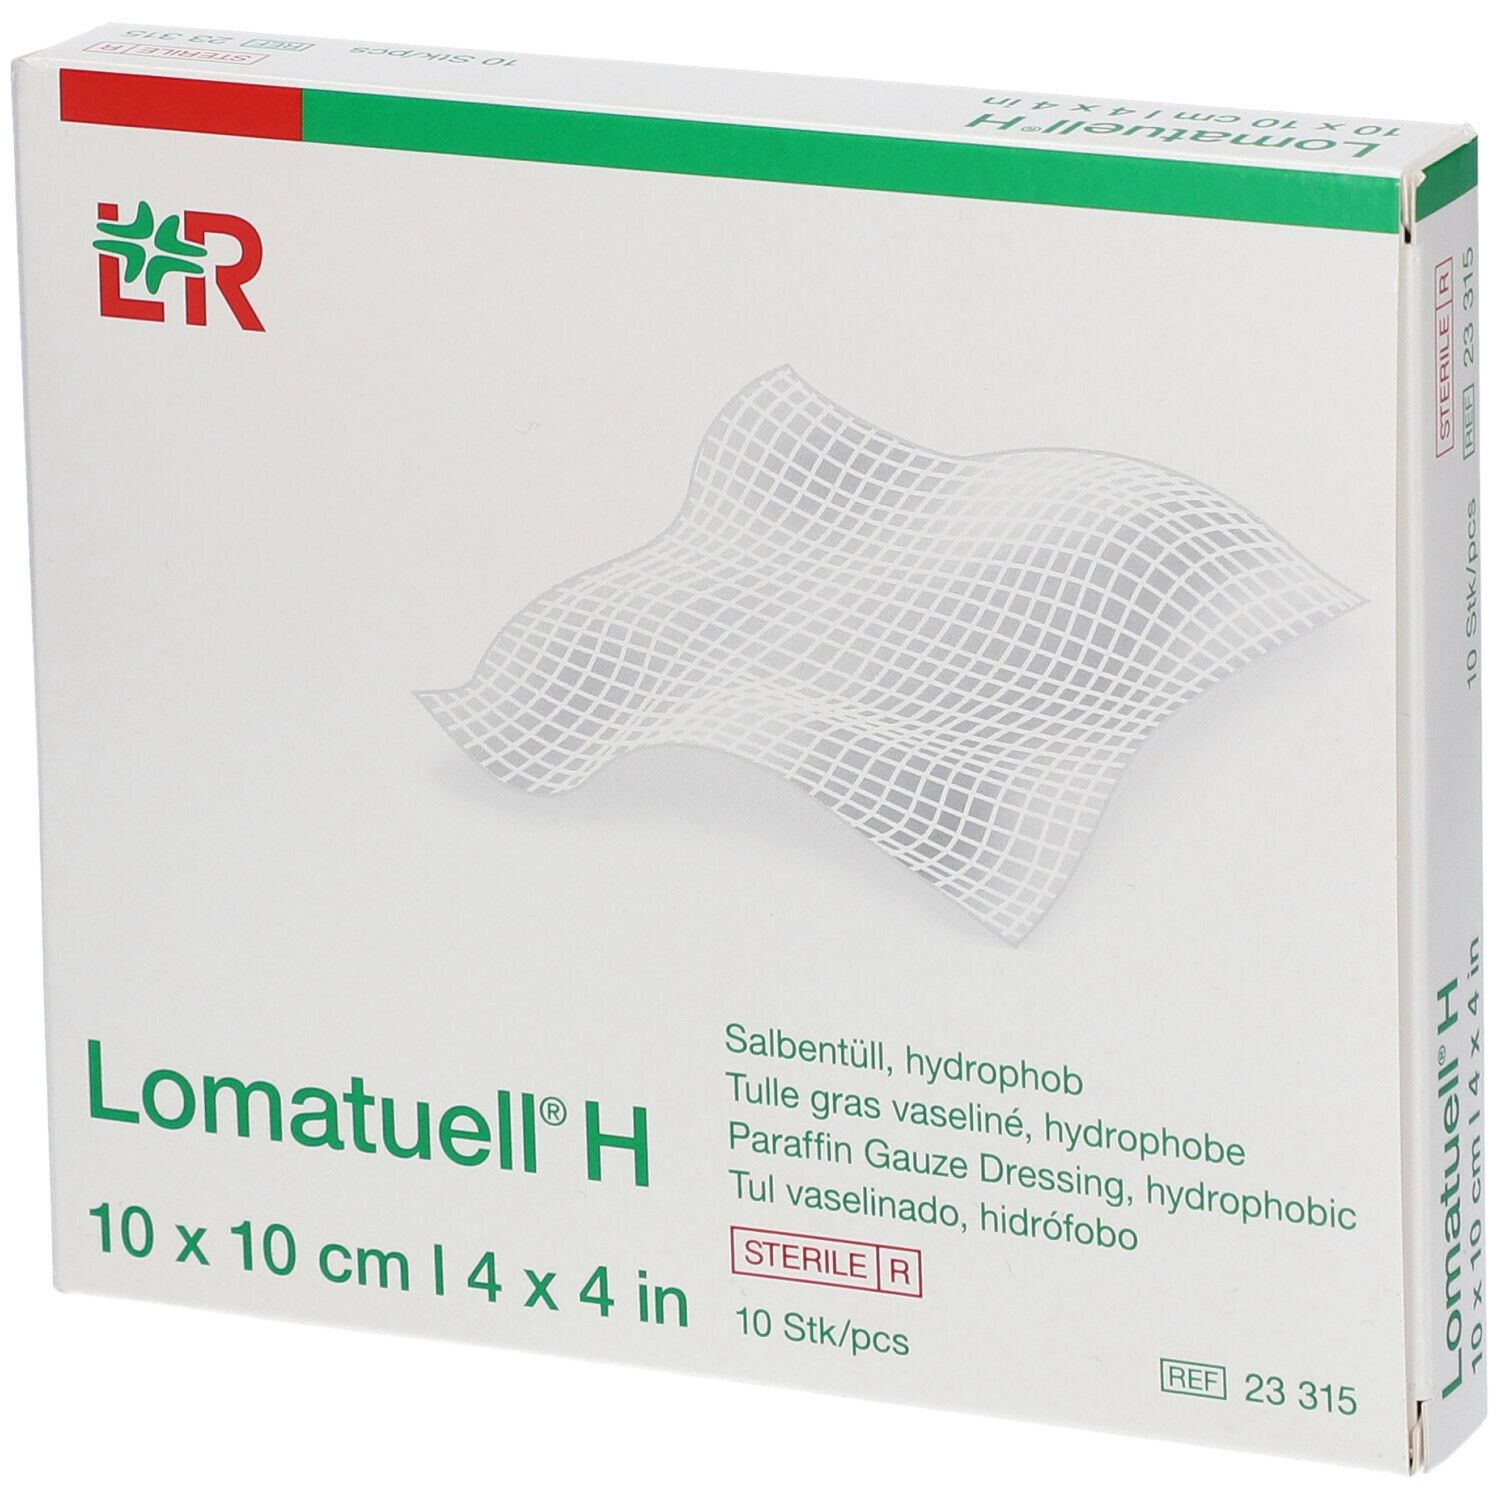 Lomatuell® H 10 x 10 cm